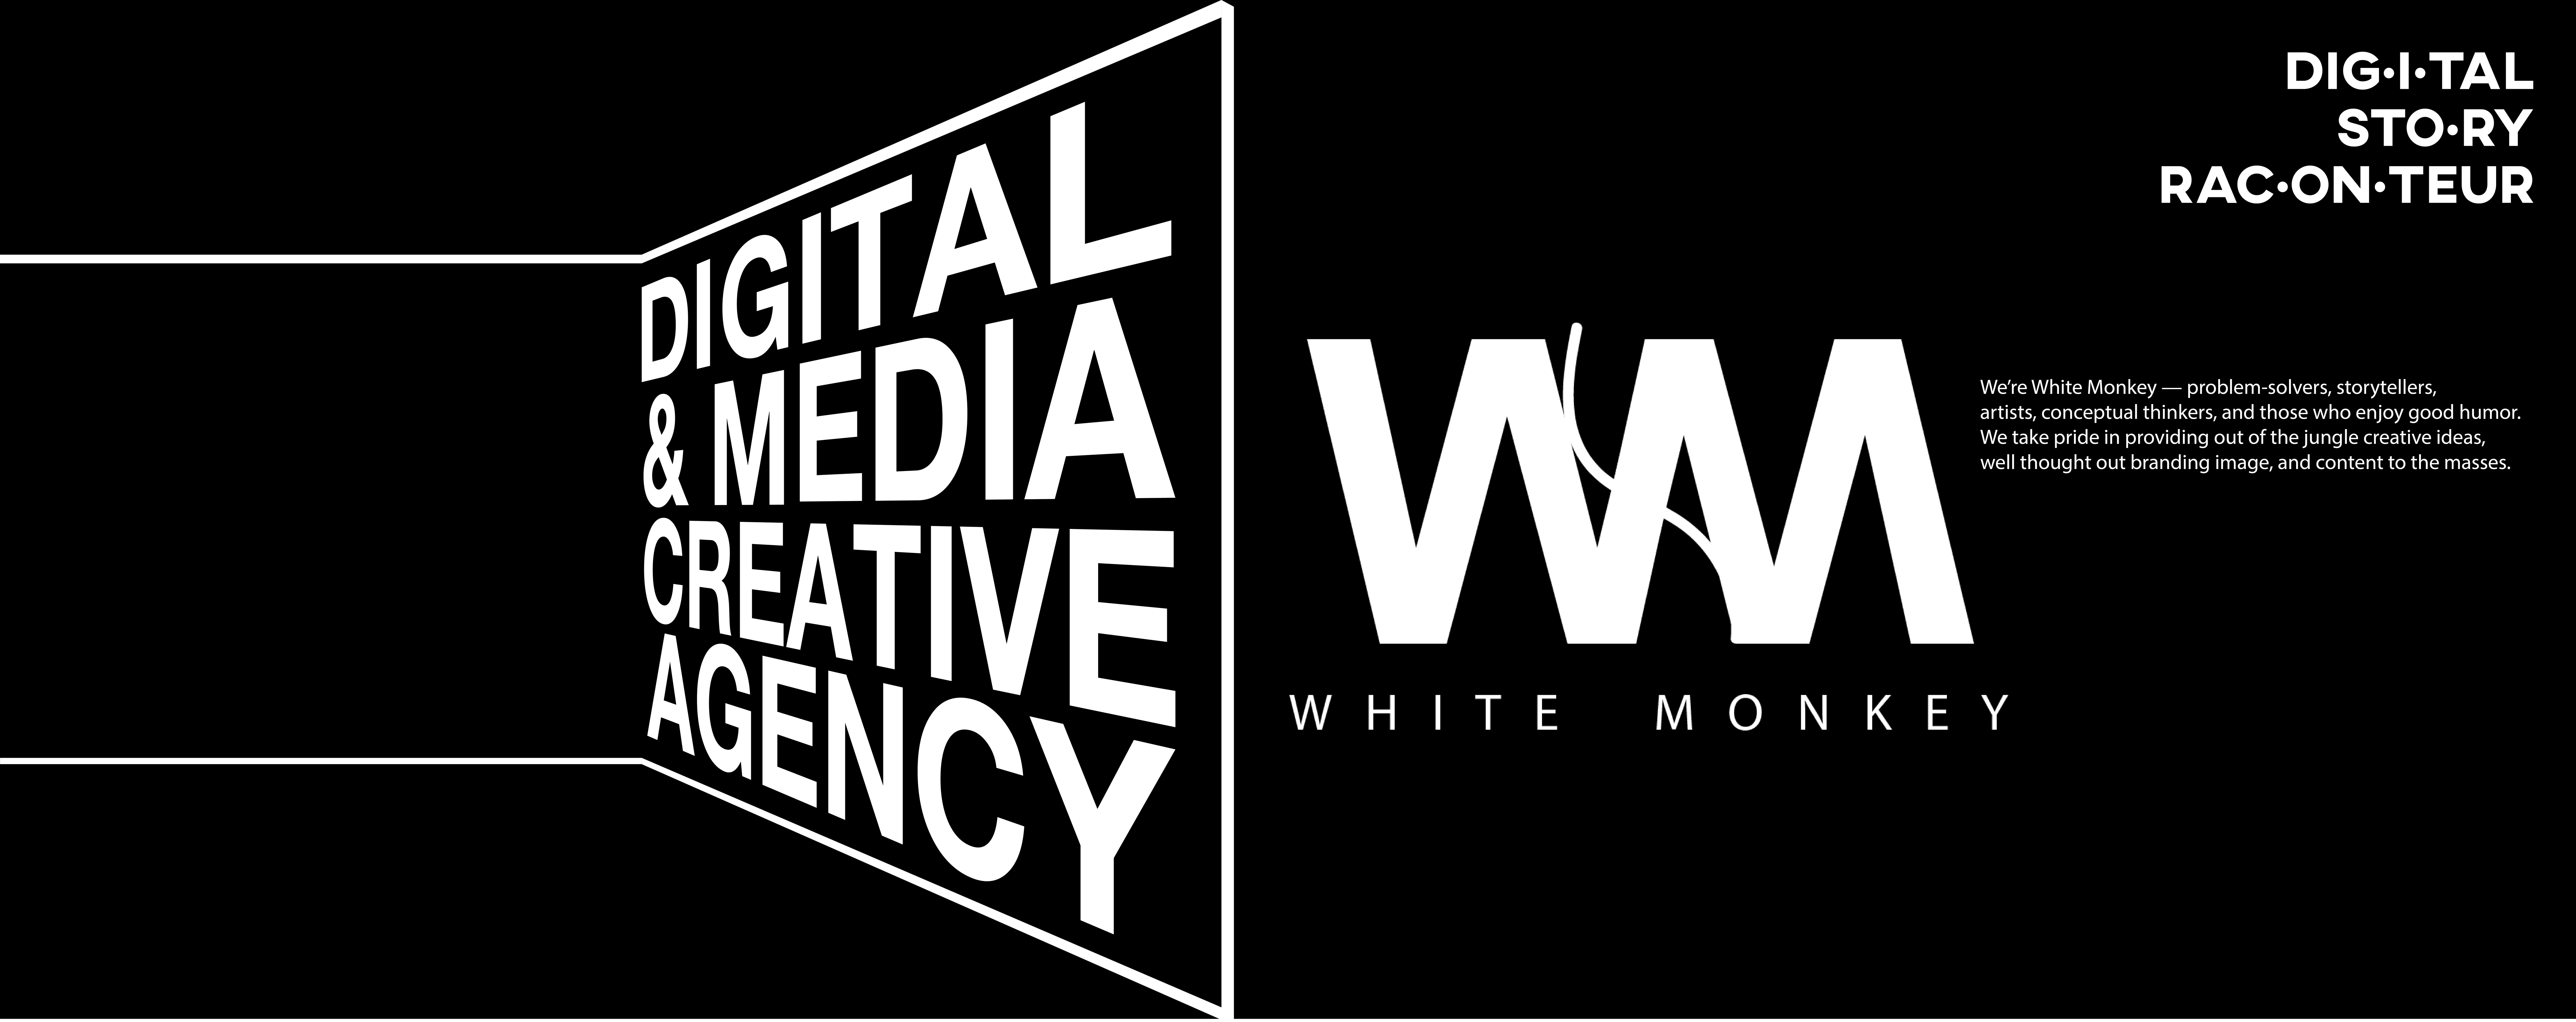 White Monkey Digital Lab cover